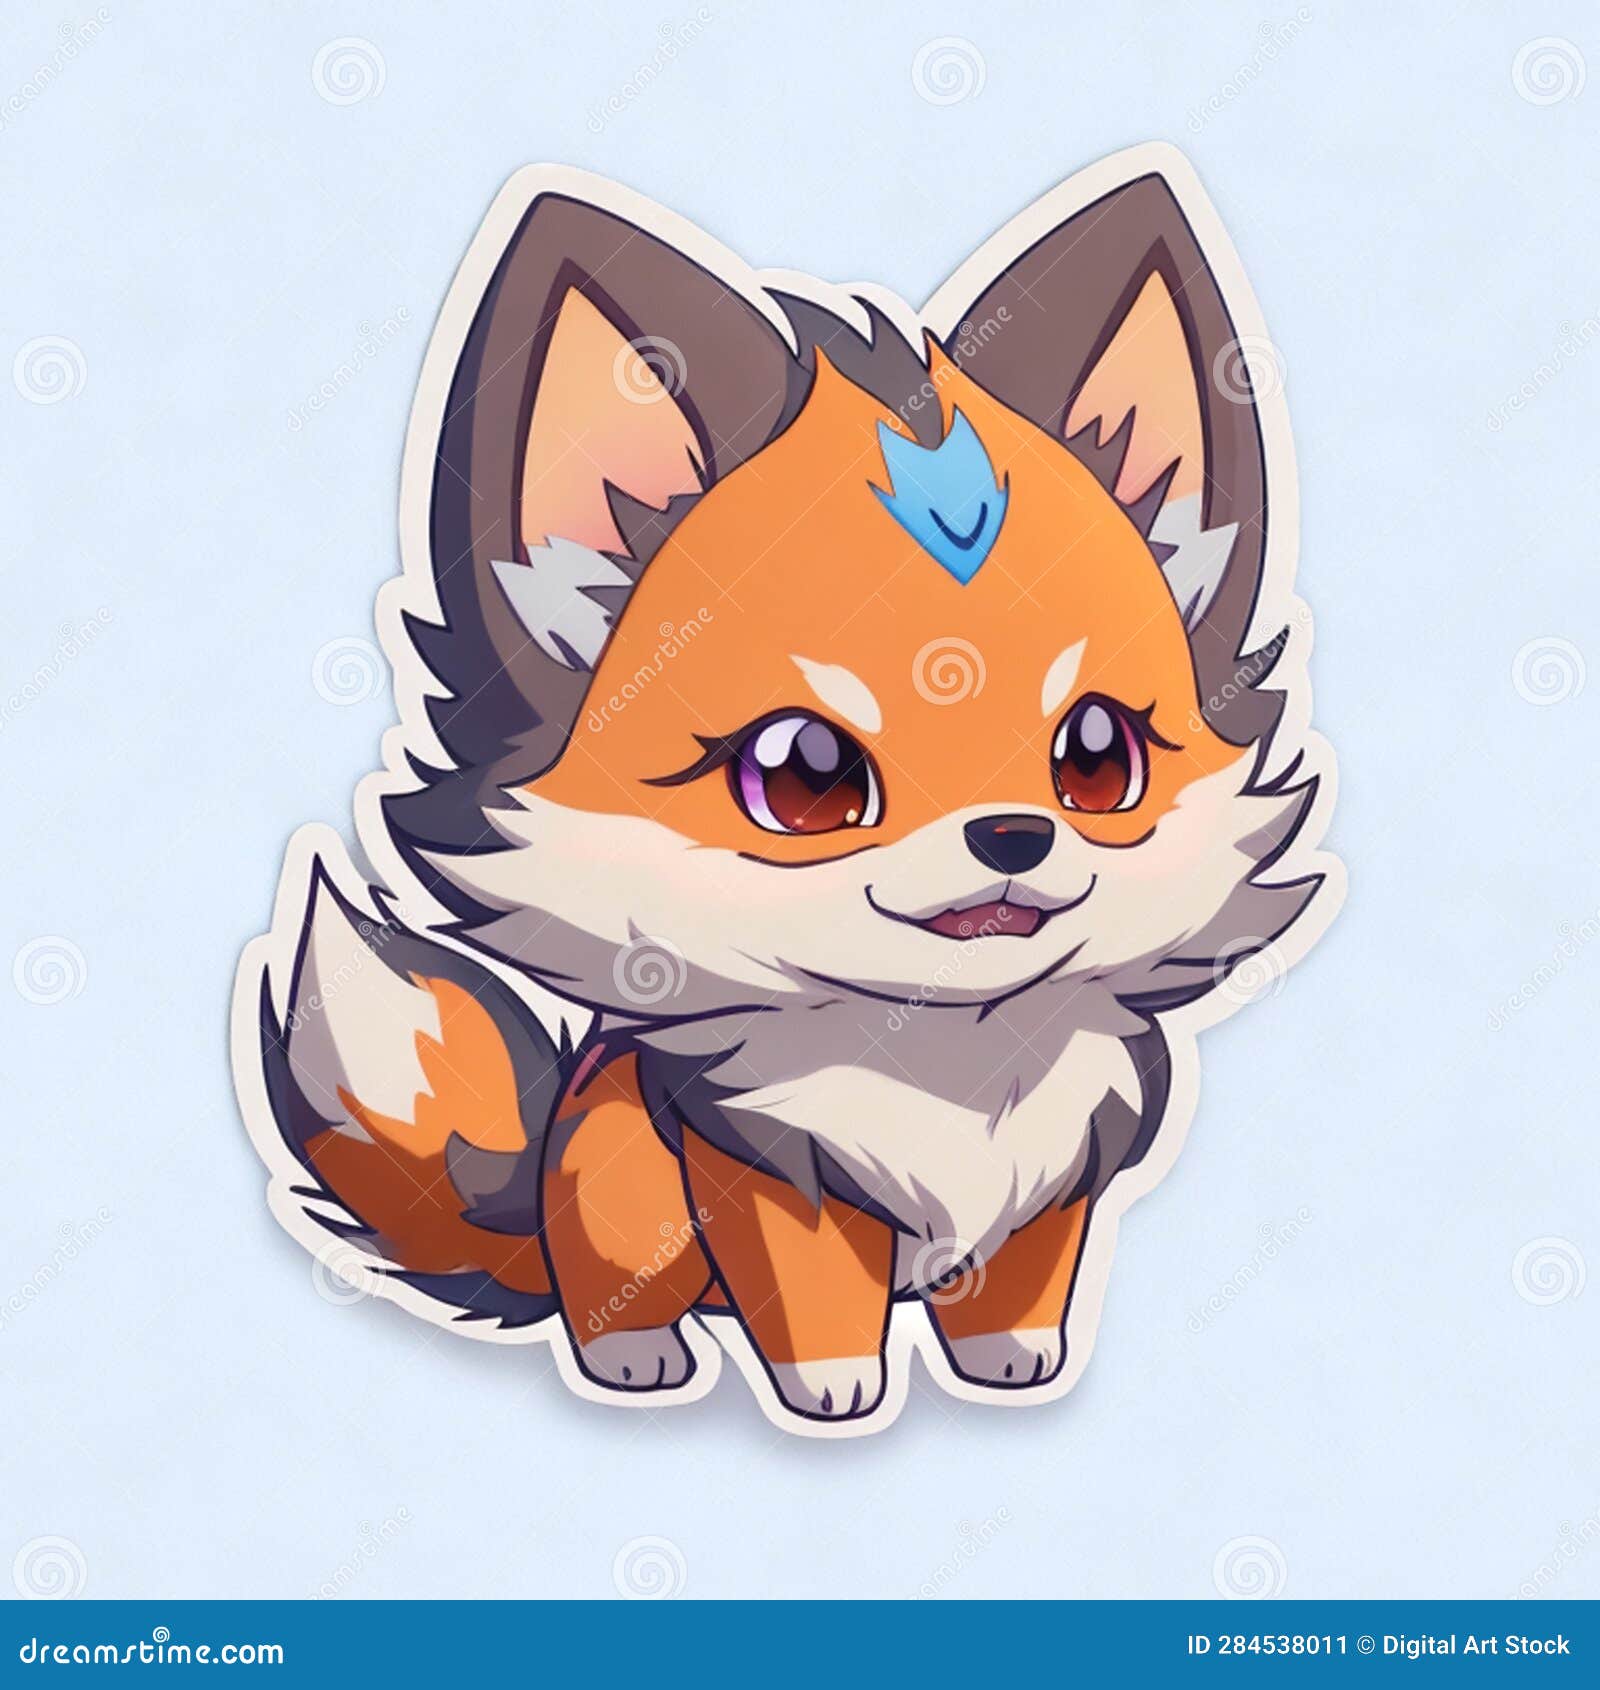 Chibi fox - Google Search | Cute animal drawings, Anime animals, Kawaii  drawings